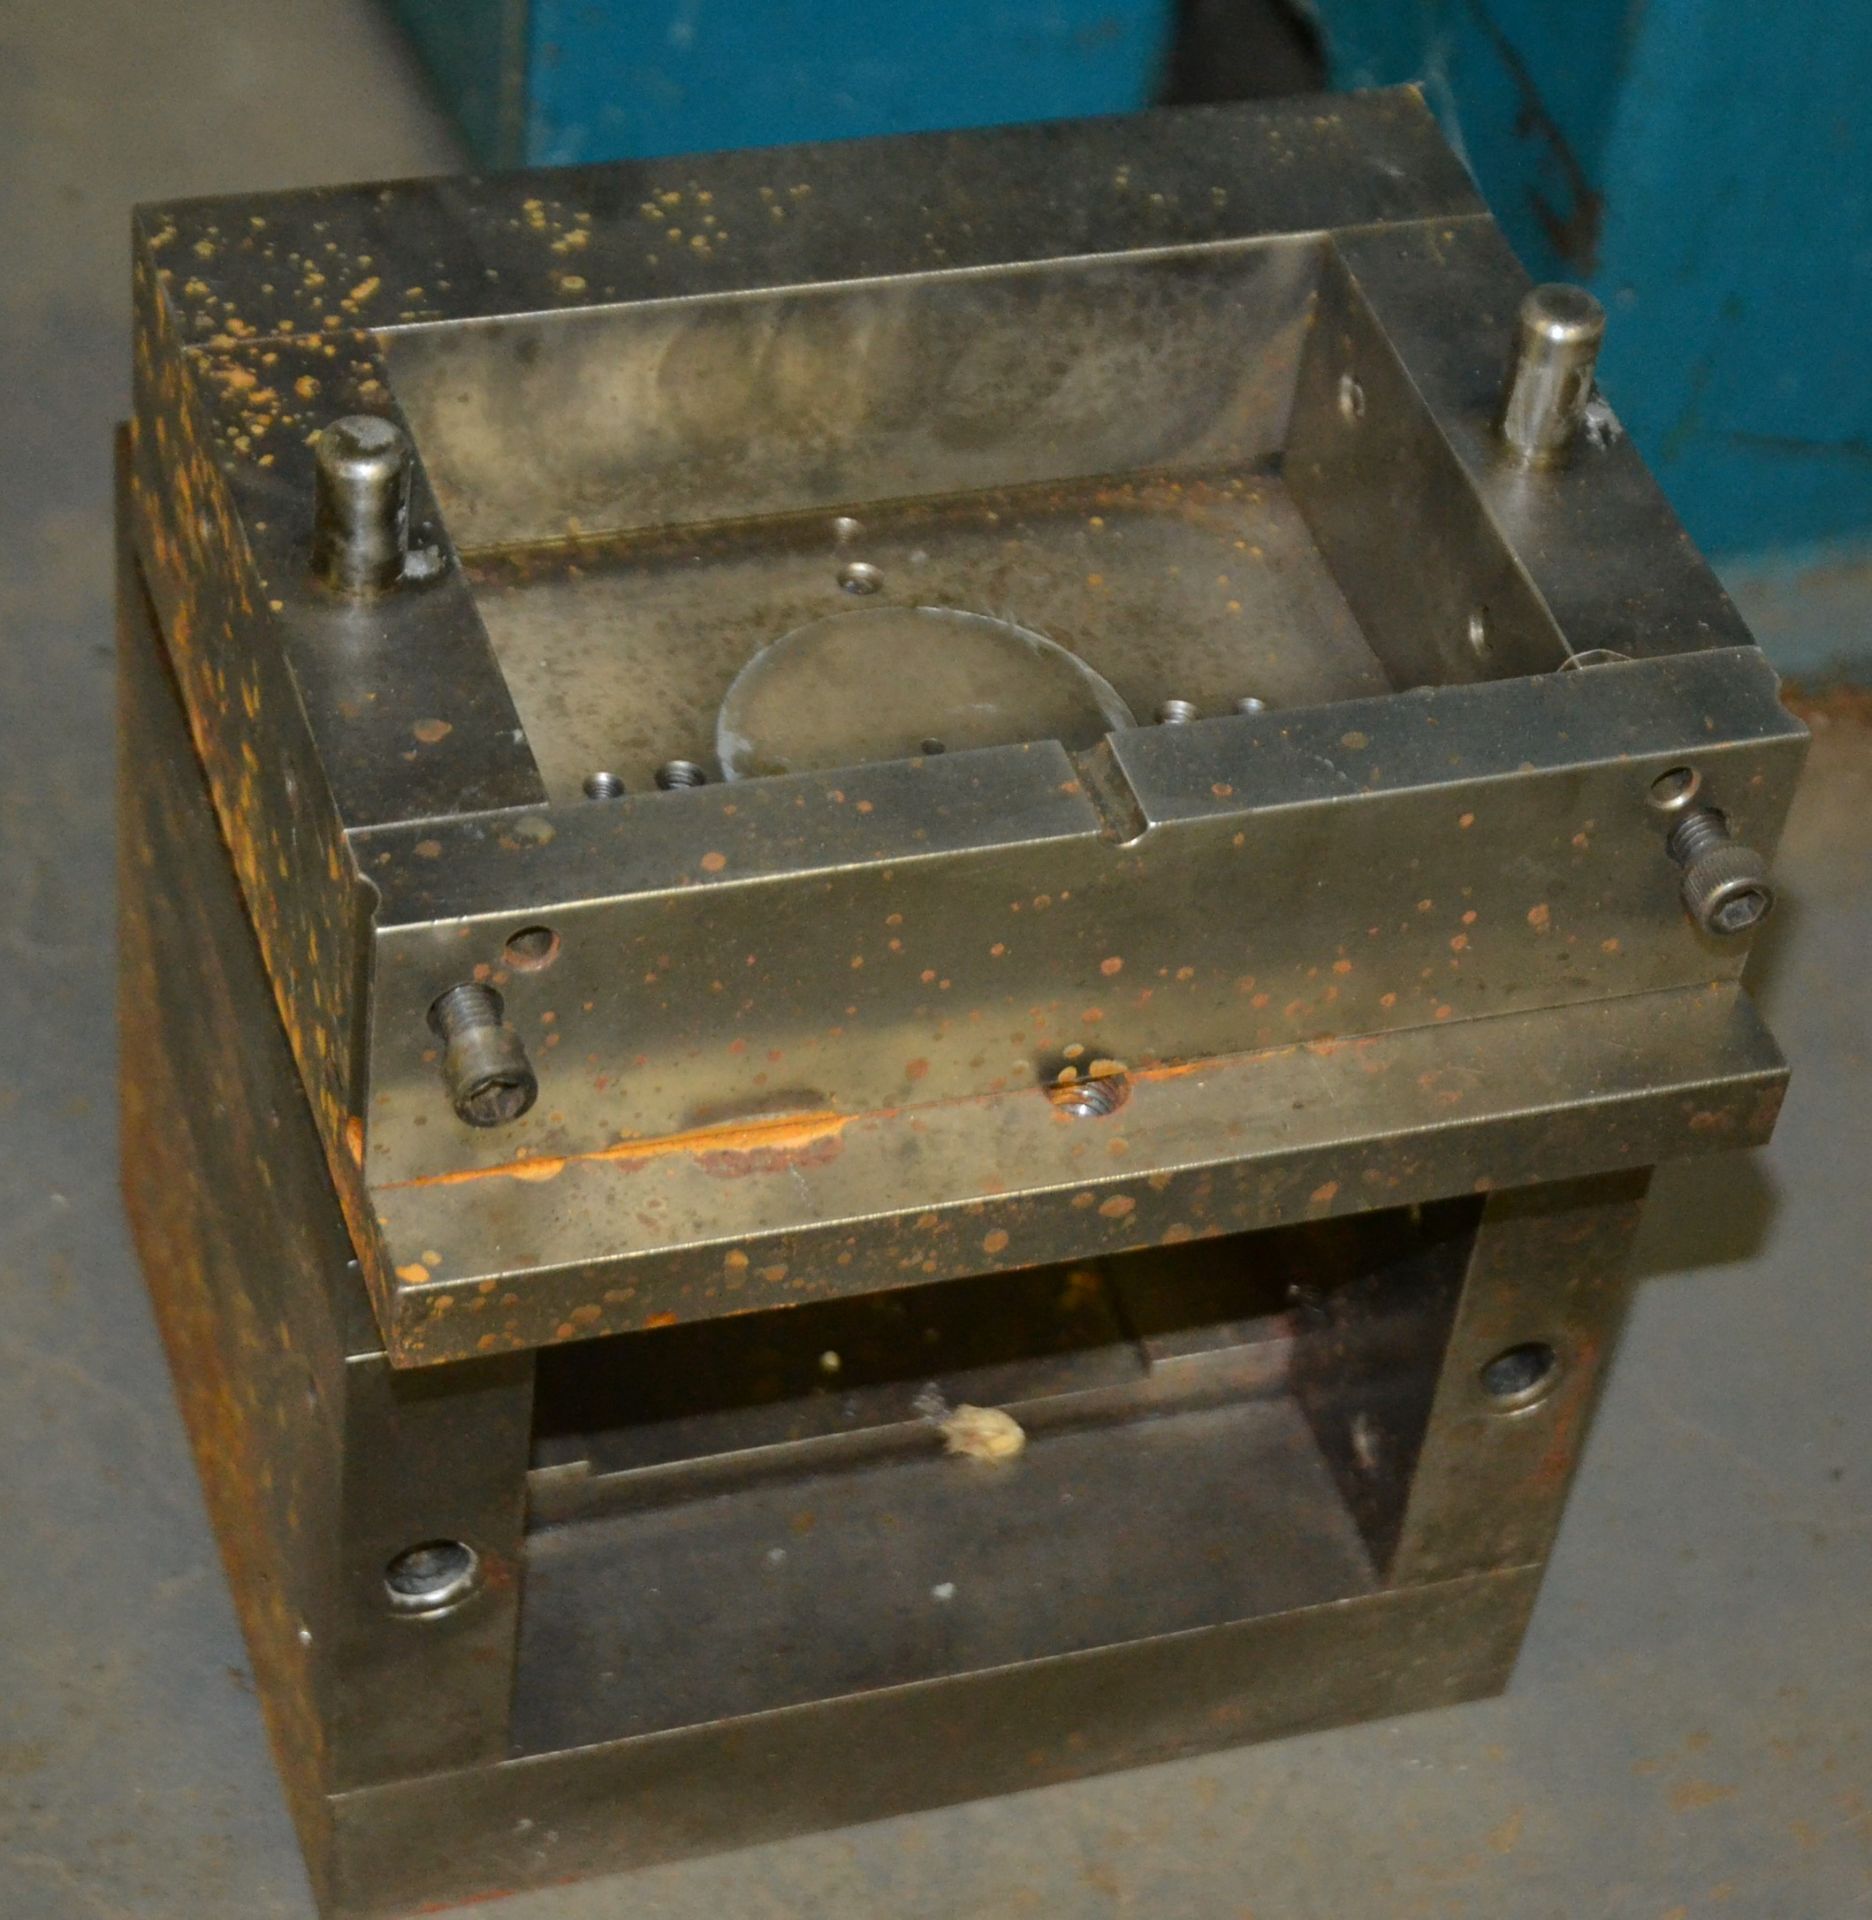 Avnet Boy 15 Injection Molding Machine - Image 3 of 4